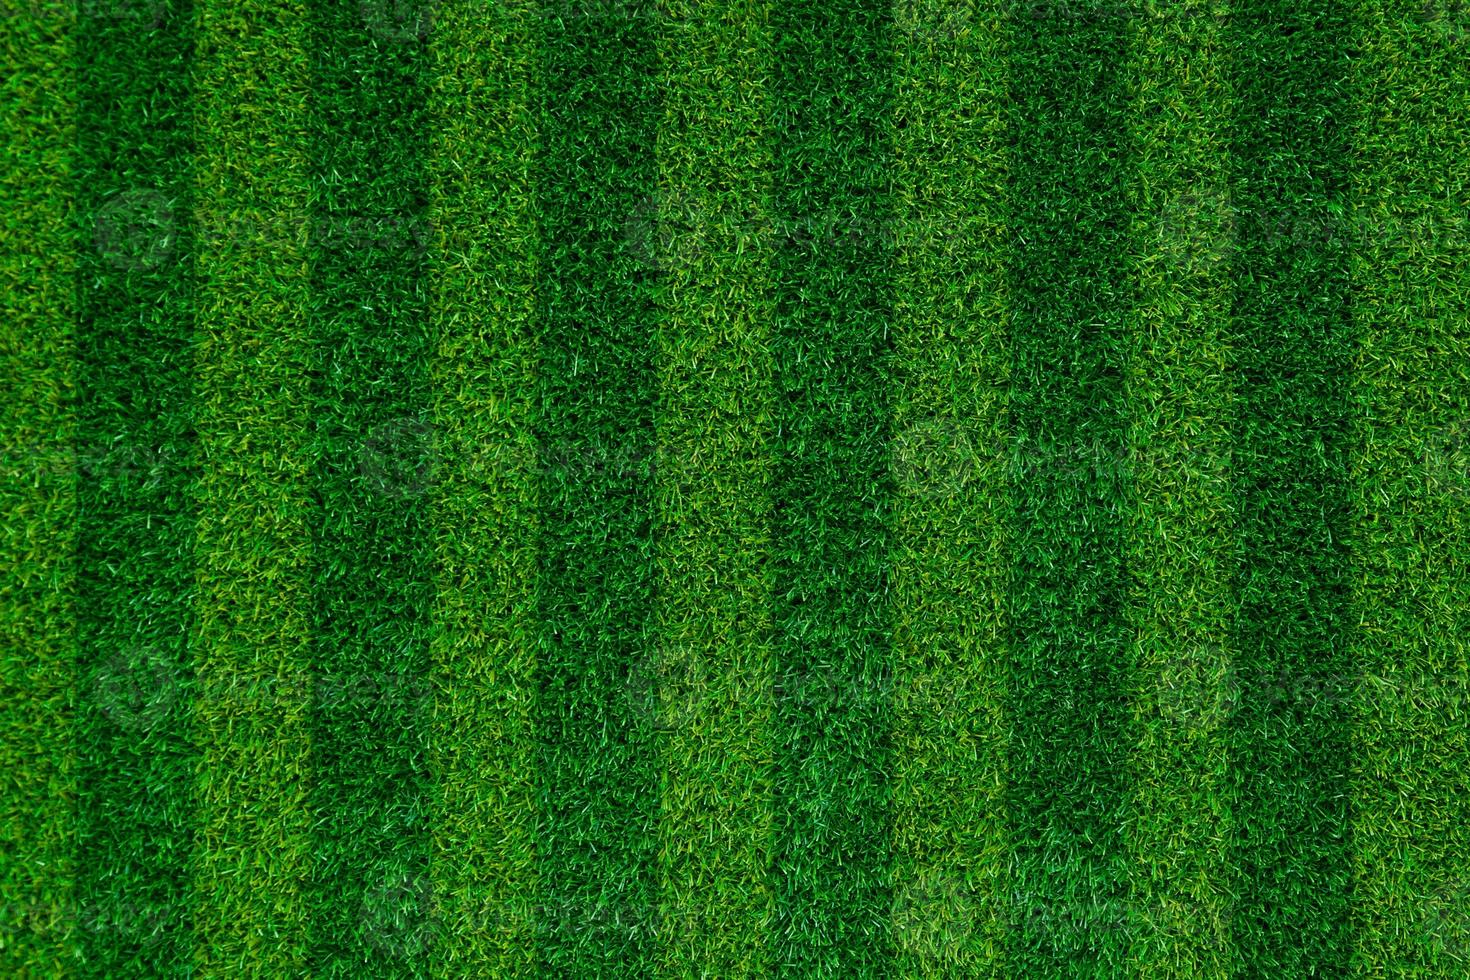 campo de futebol de grama verde abstrato de textura de fundo de grama artificial, vista superior foto